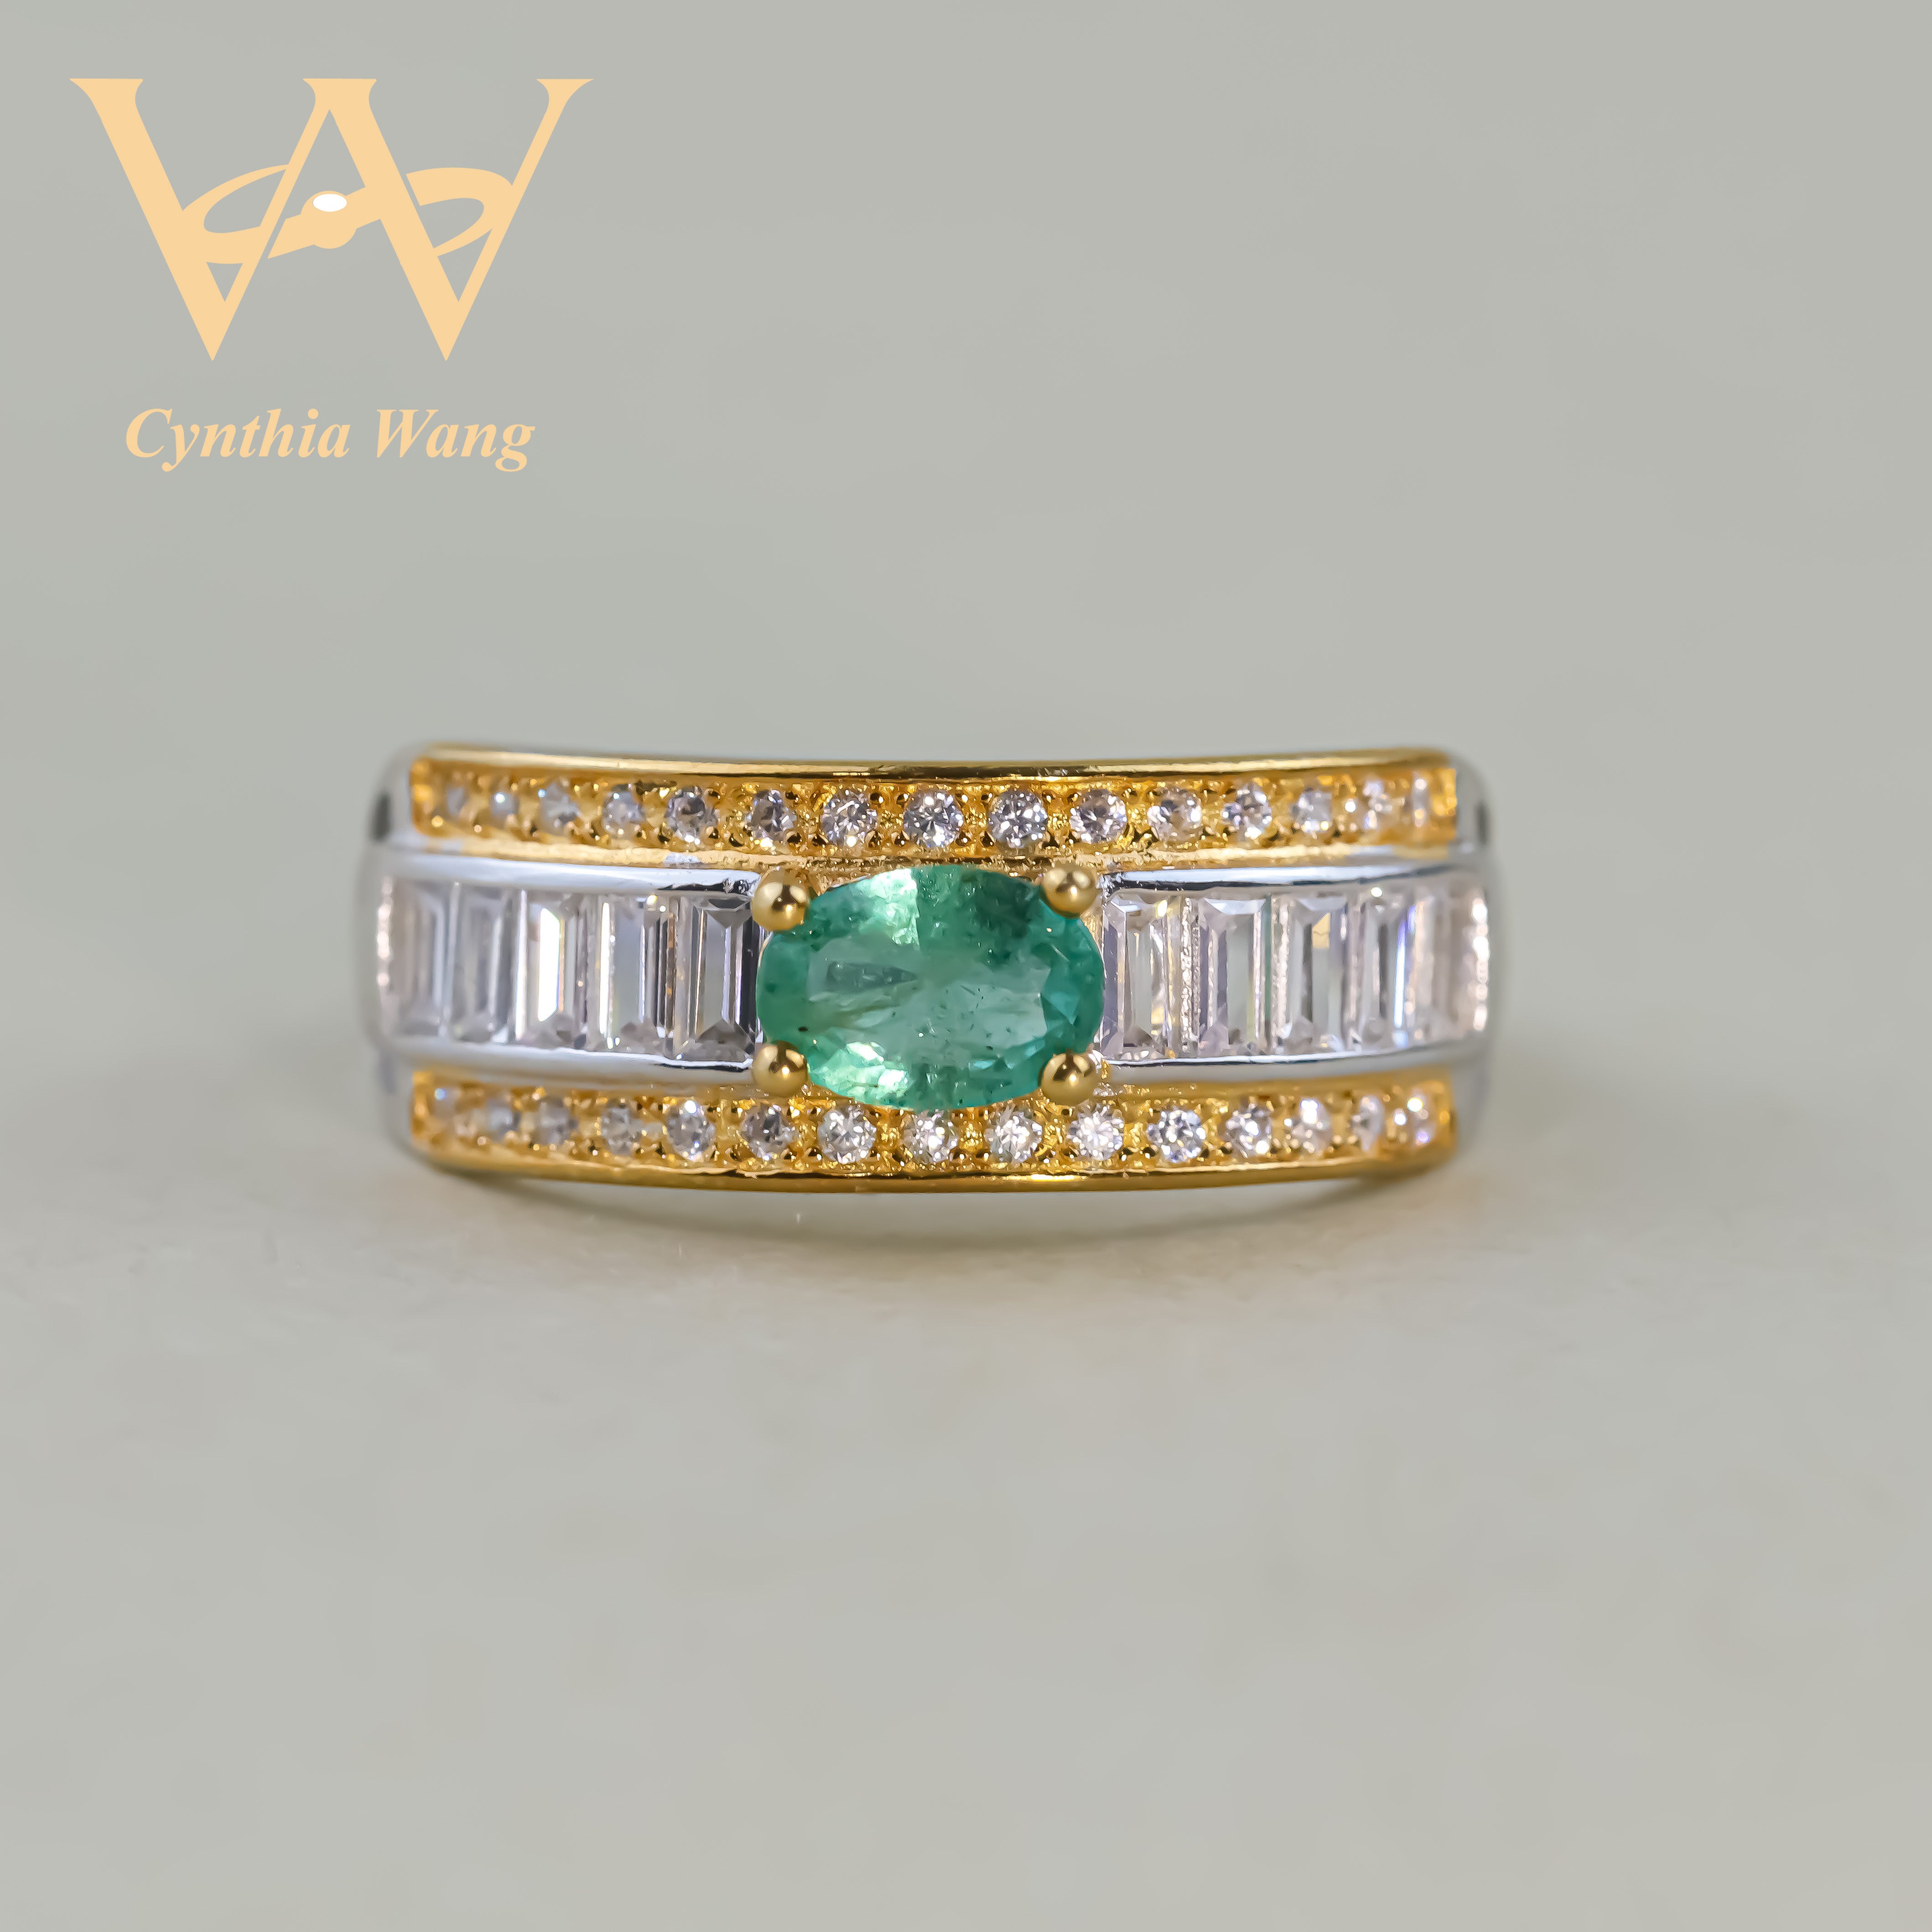 'Guardian Knight' Emerald Ring